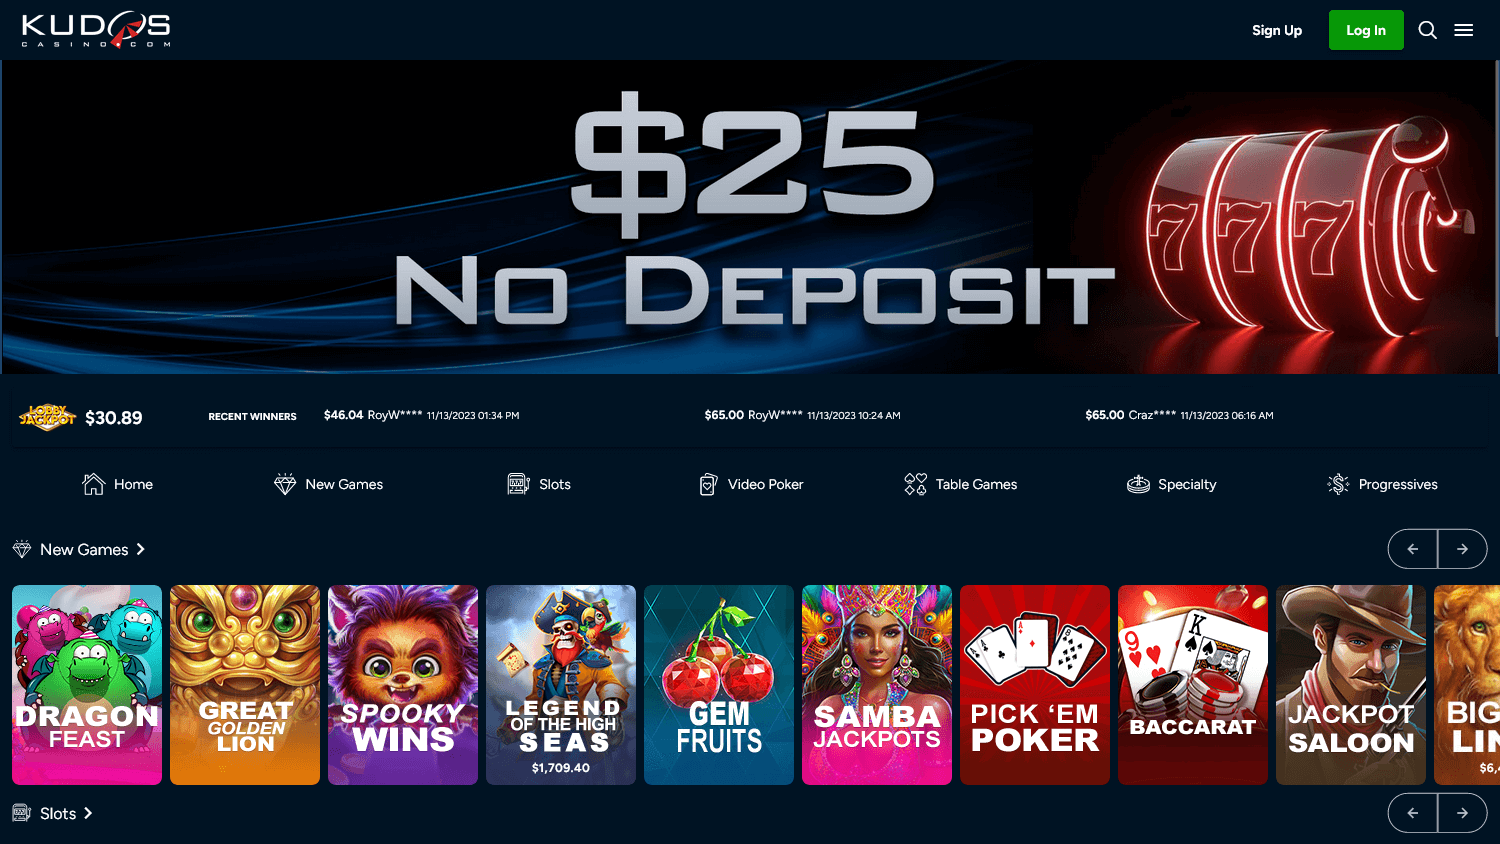 kudos_casino_homepage_desktop